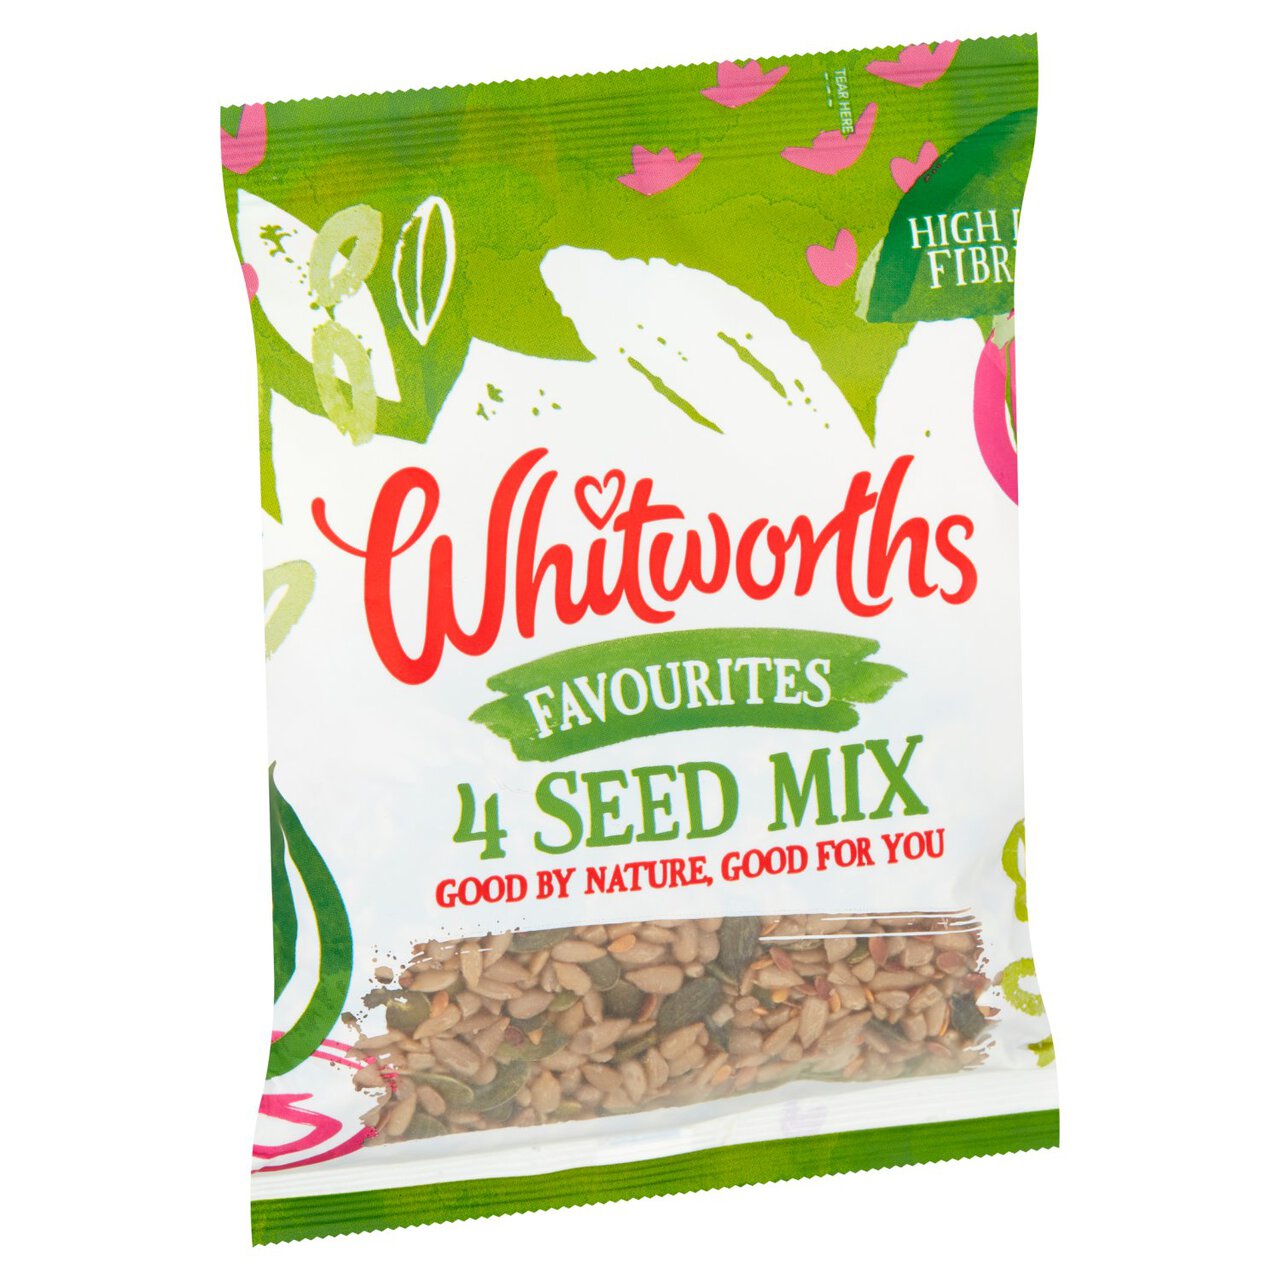 Whitworths Favourites 4 Seed Mix 200g